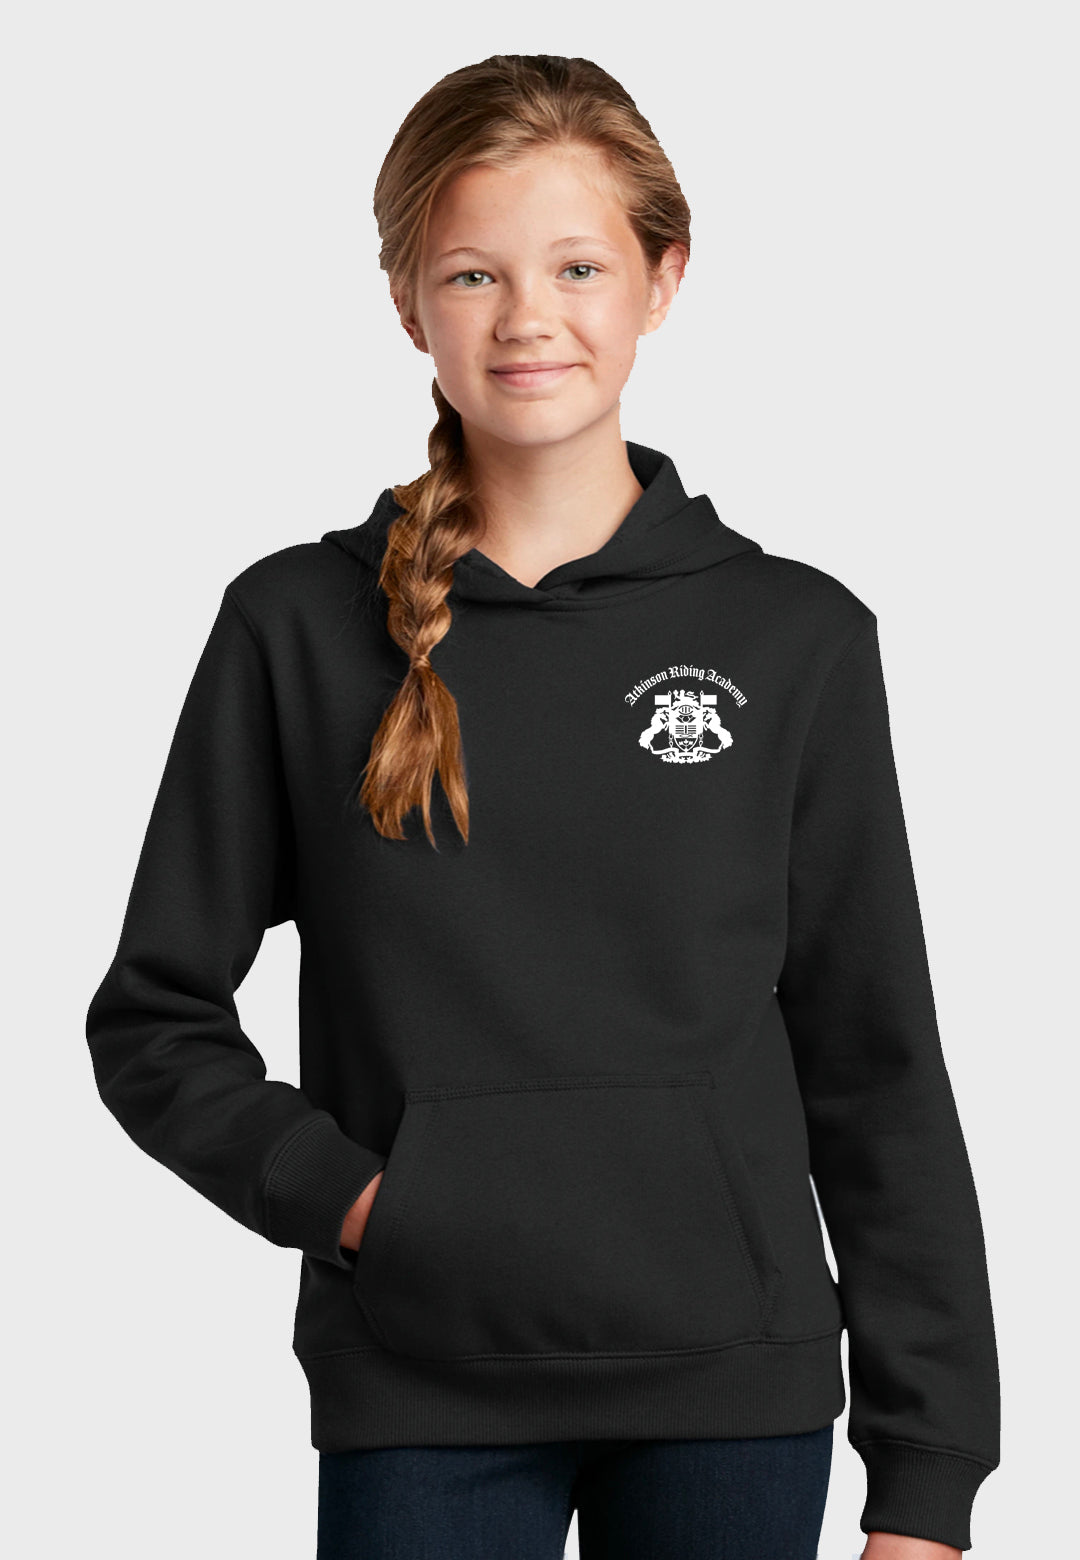 Atkinson Riding Academy Sport-Tek®  Youth Hooded Sweatshirt - Black, Grey, Red, or Navy